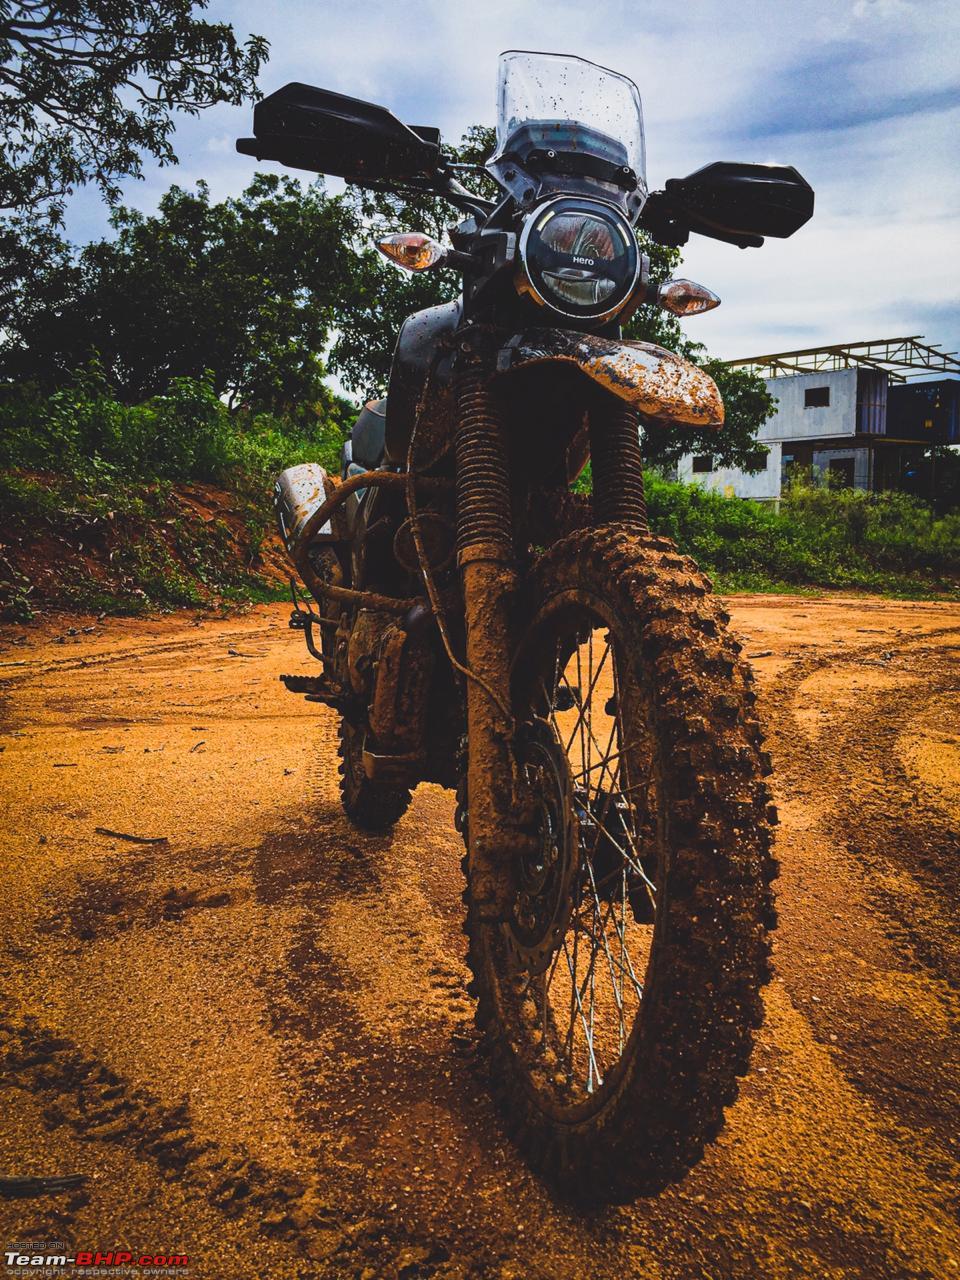 MotoFarm: Dirt track with rental motorcycles for fun @ Bangalore - Team-BHP